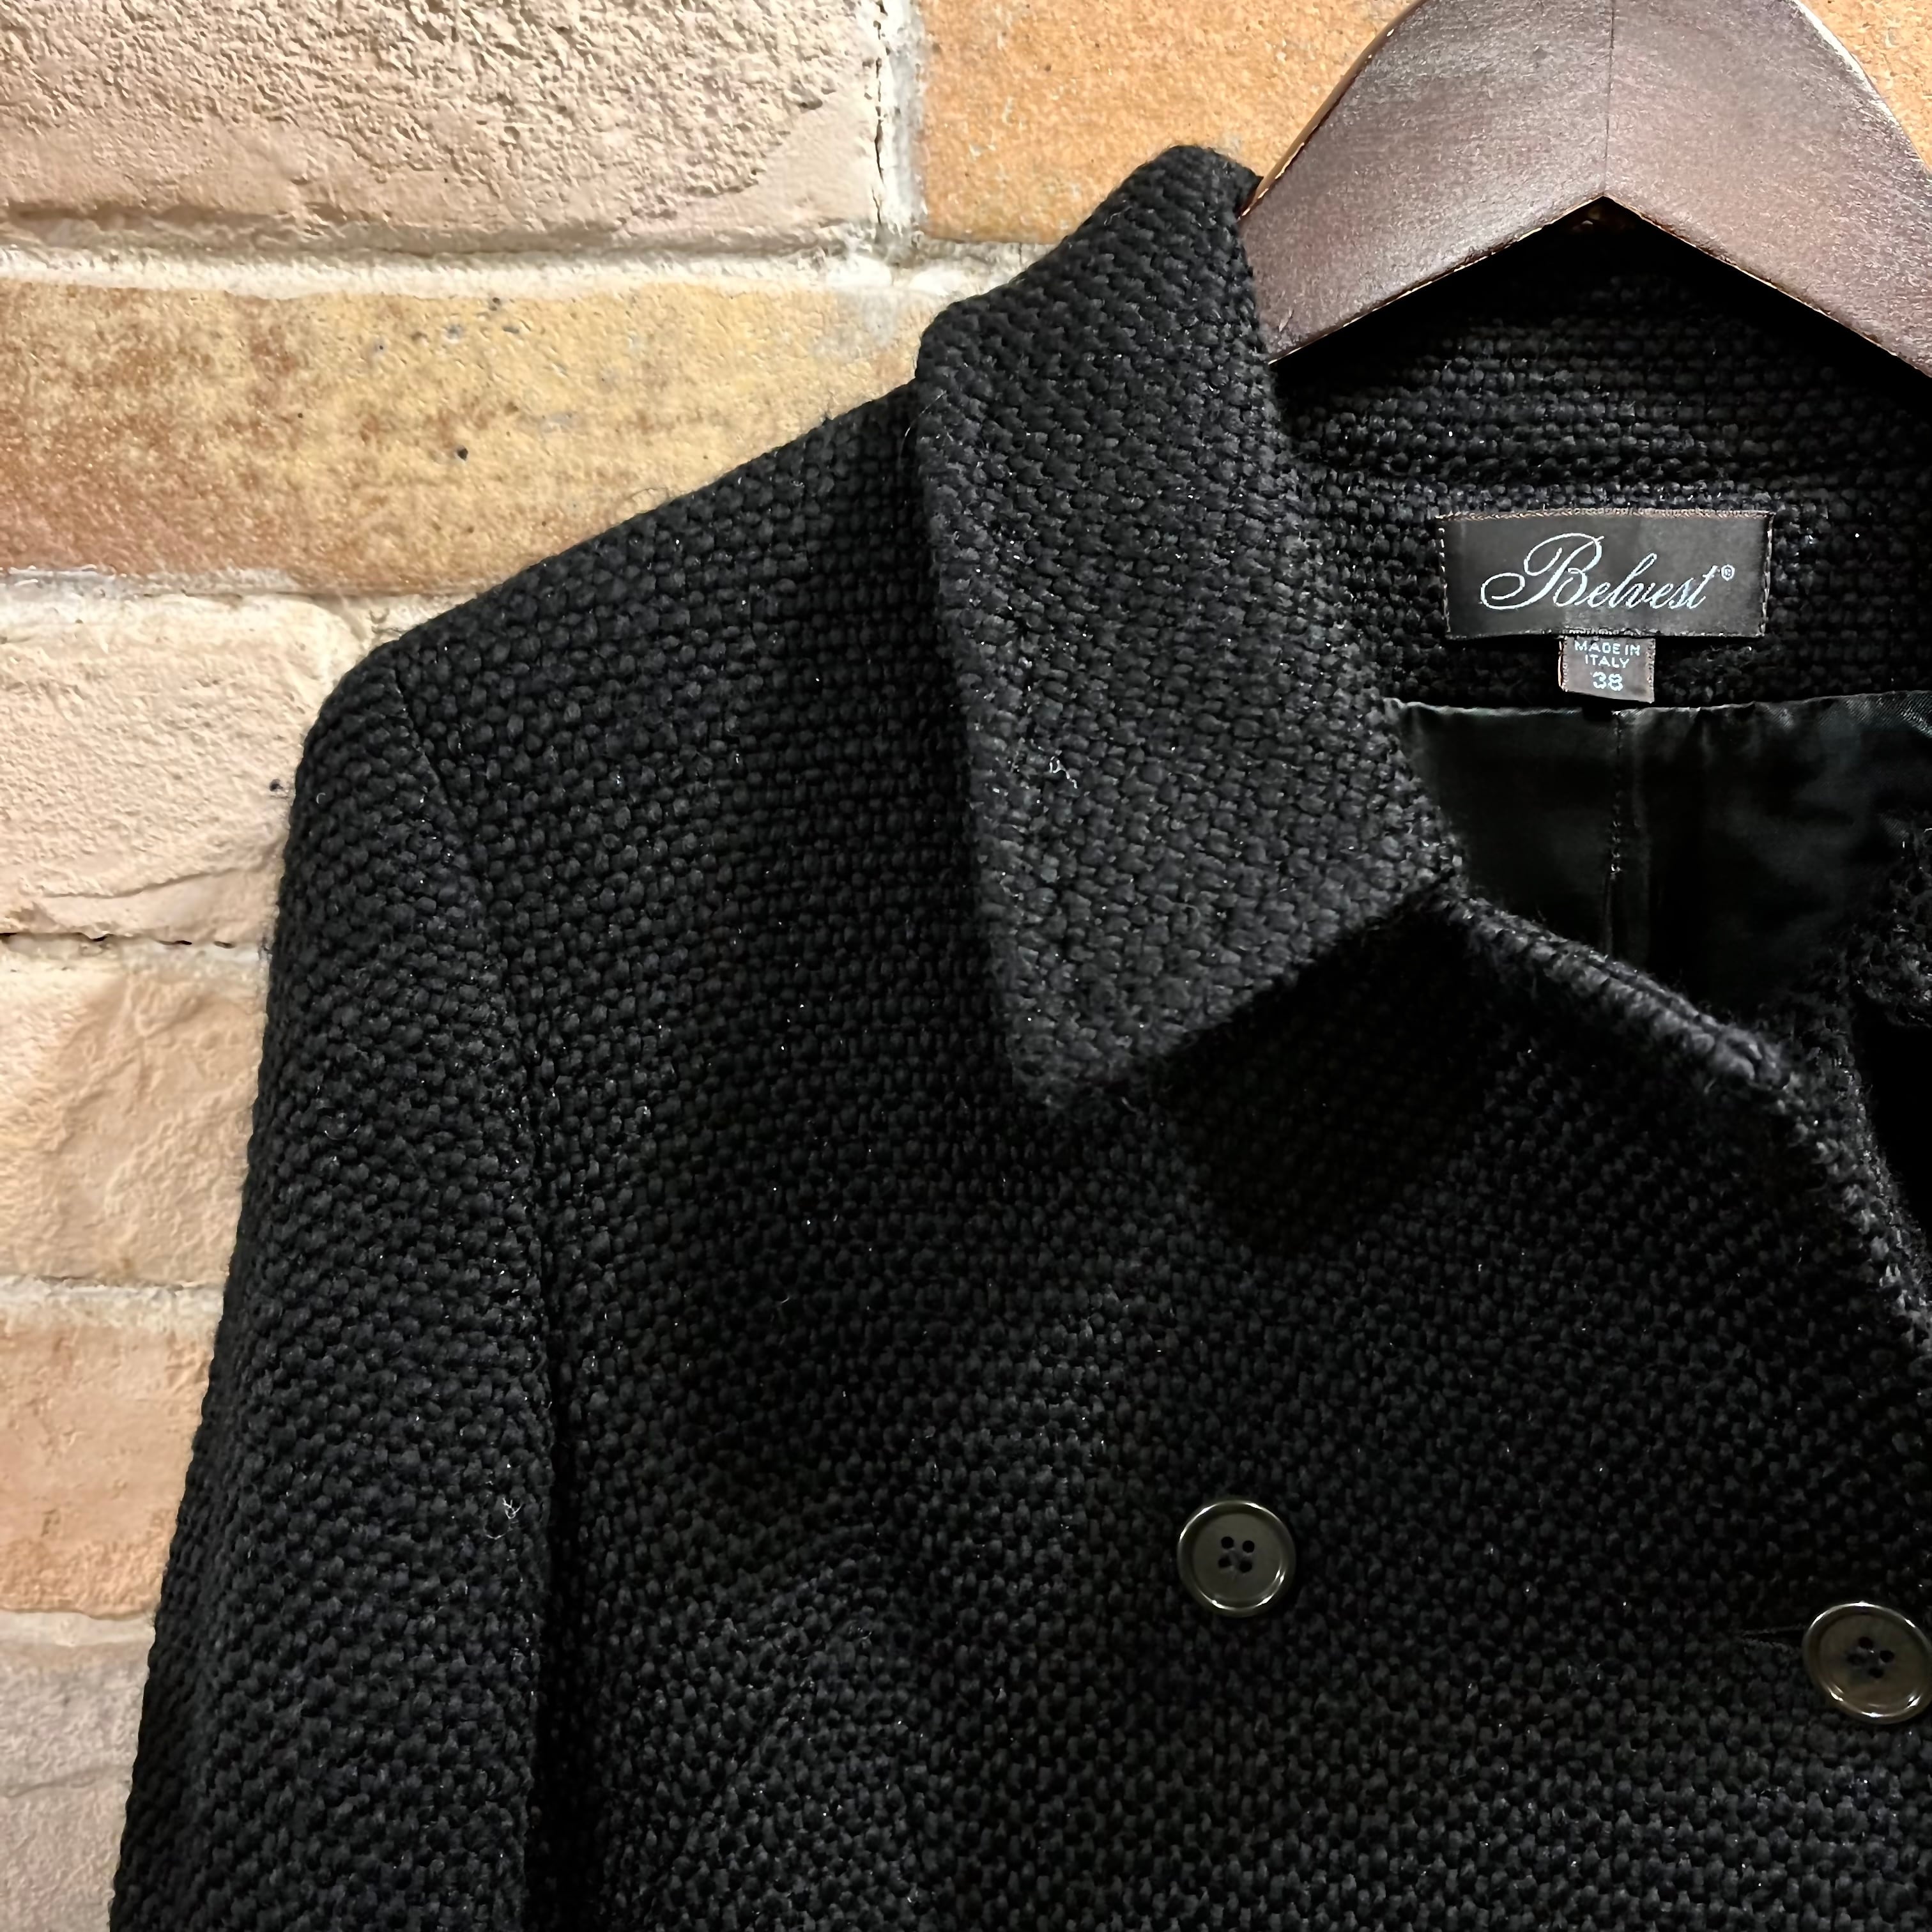 belvest ladies wool coat size38 black ベルベスト イタリア製ウール